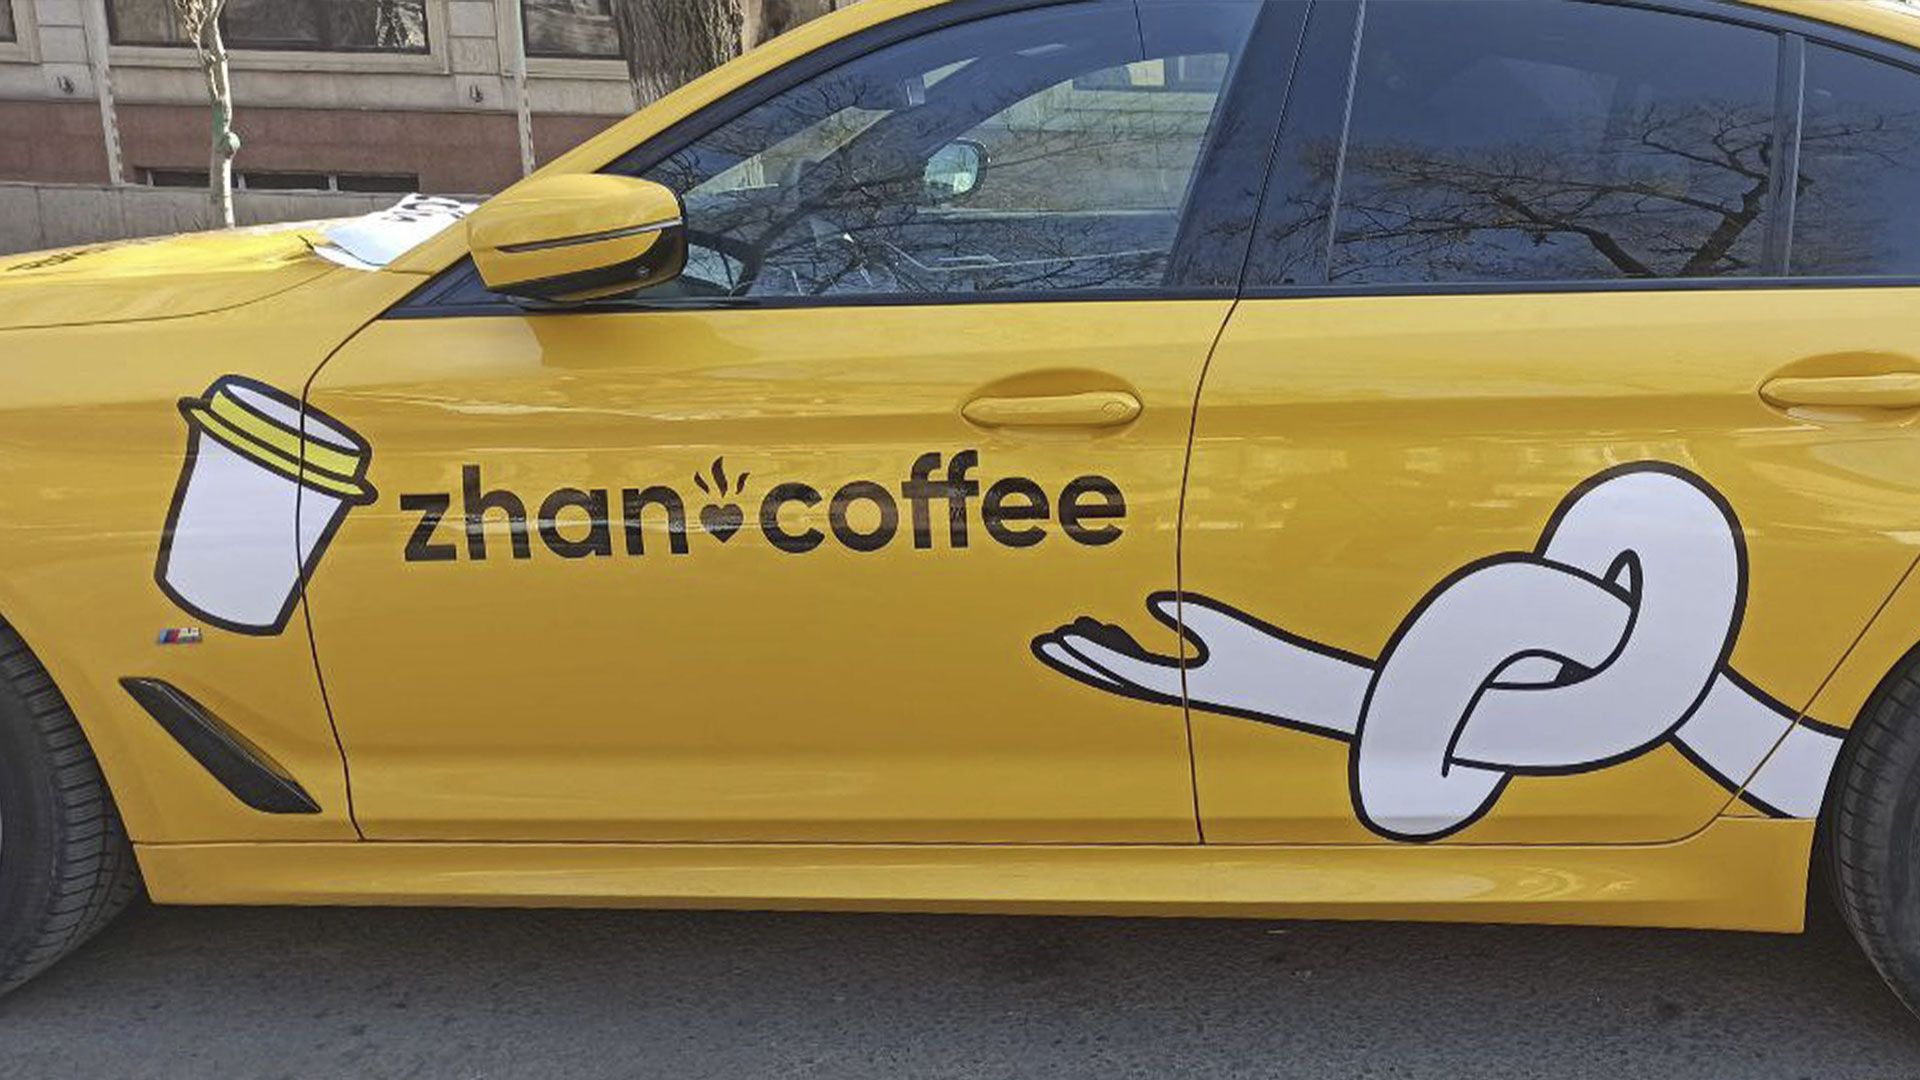 Оформление авто “Zhan coffee”​